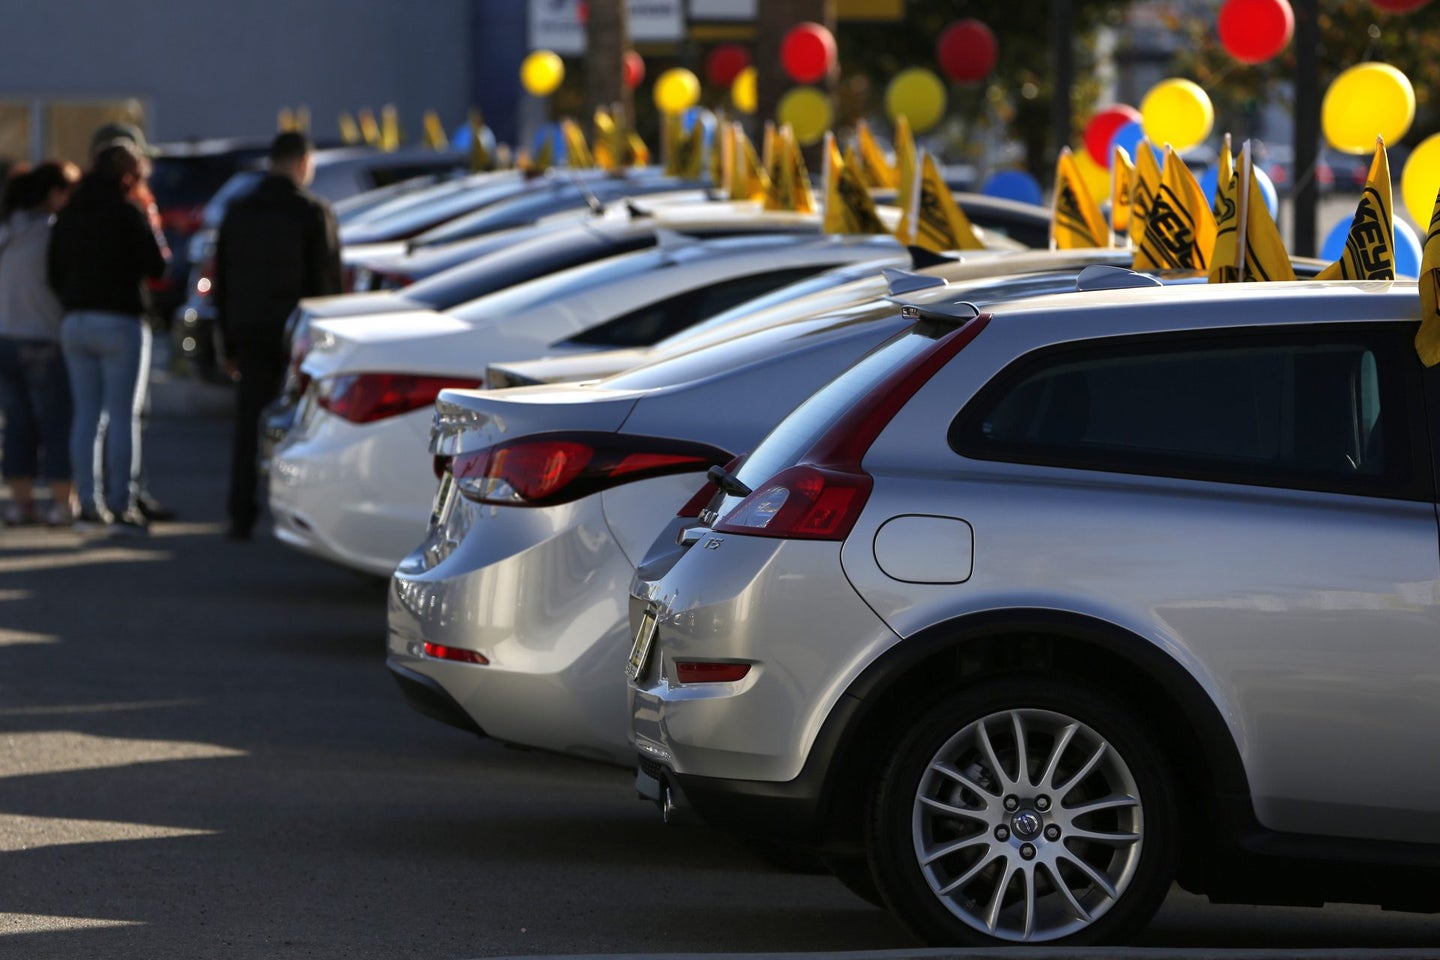 New Study Reveals Interesting Behaviors of Modern-Day Car Shoppers